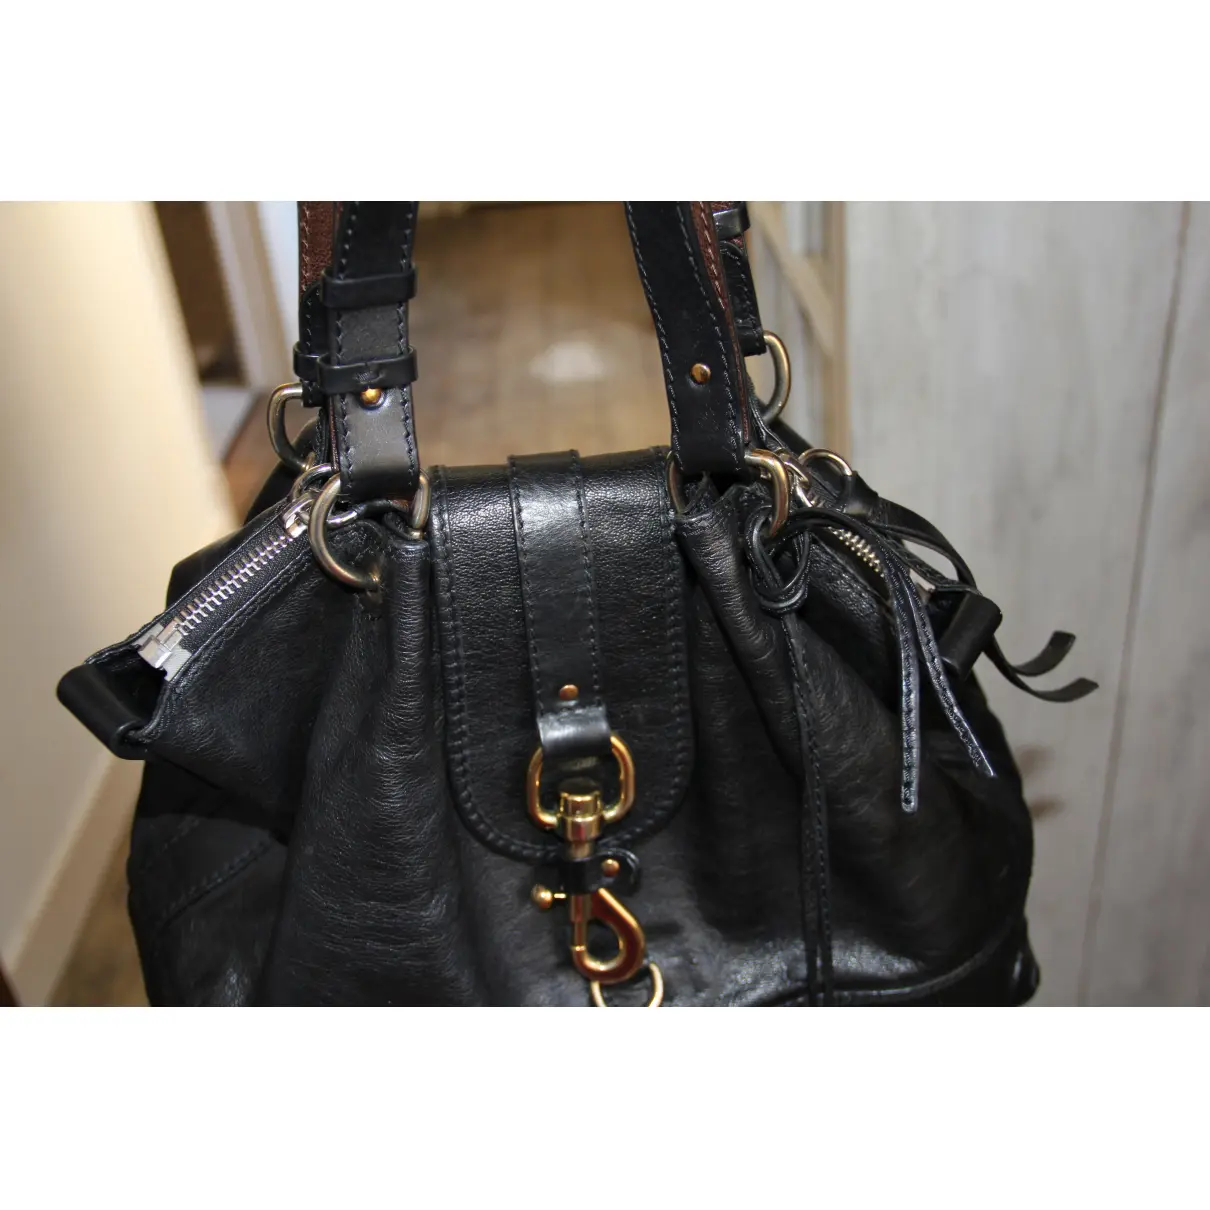 Kerala leather handbag Chloé